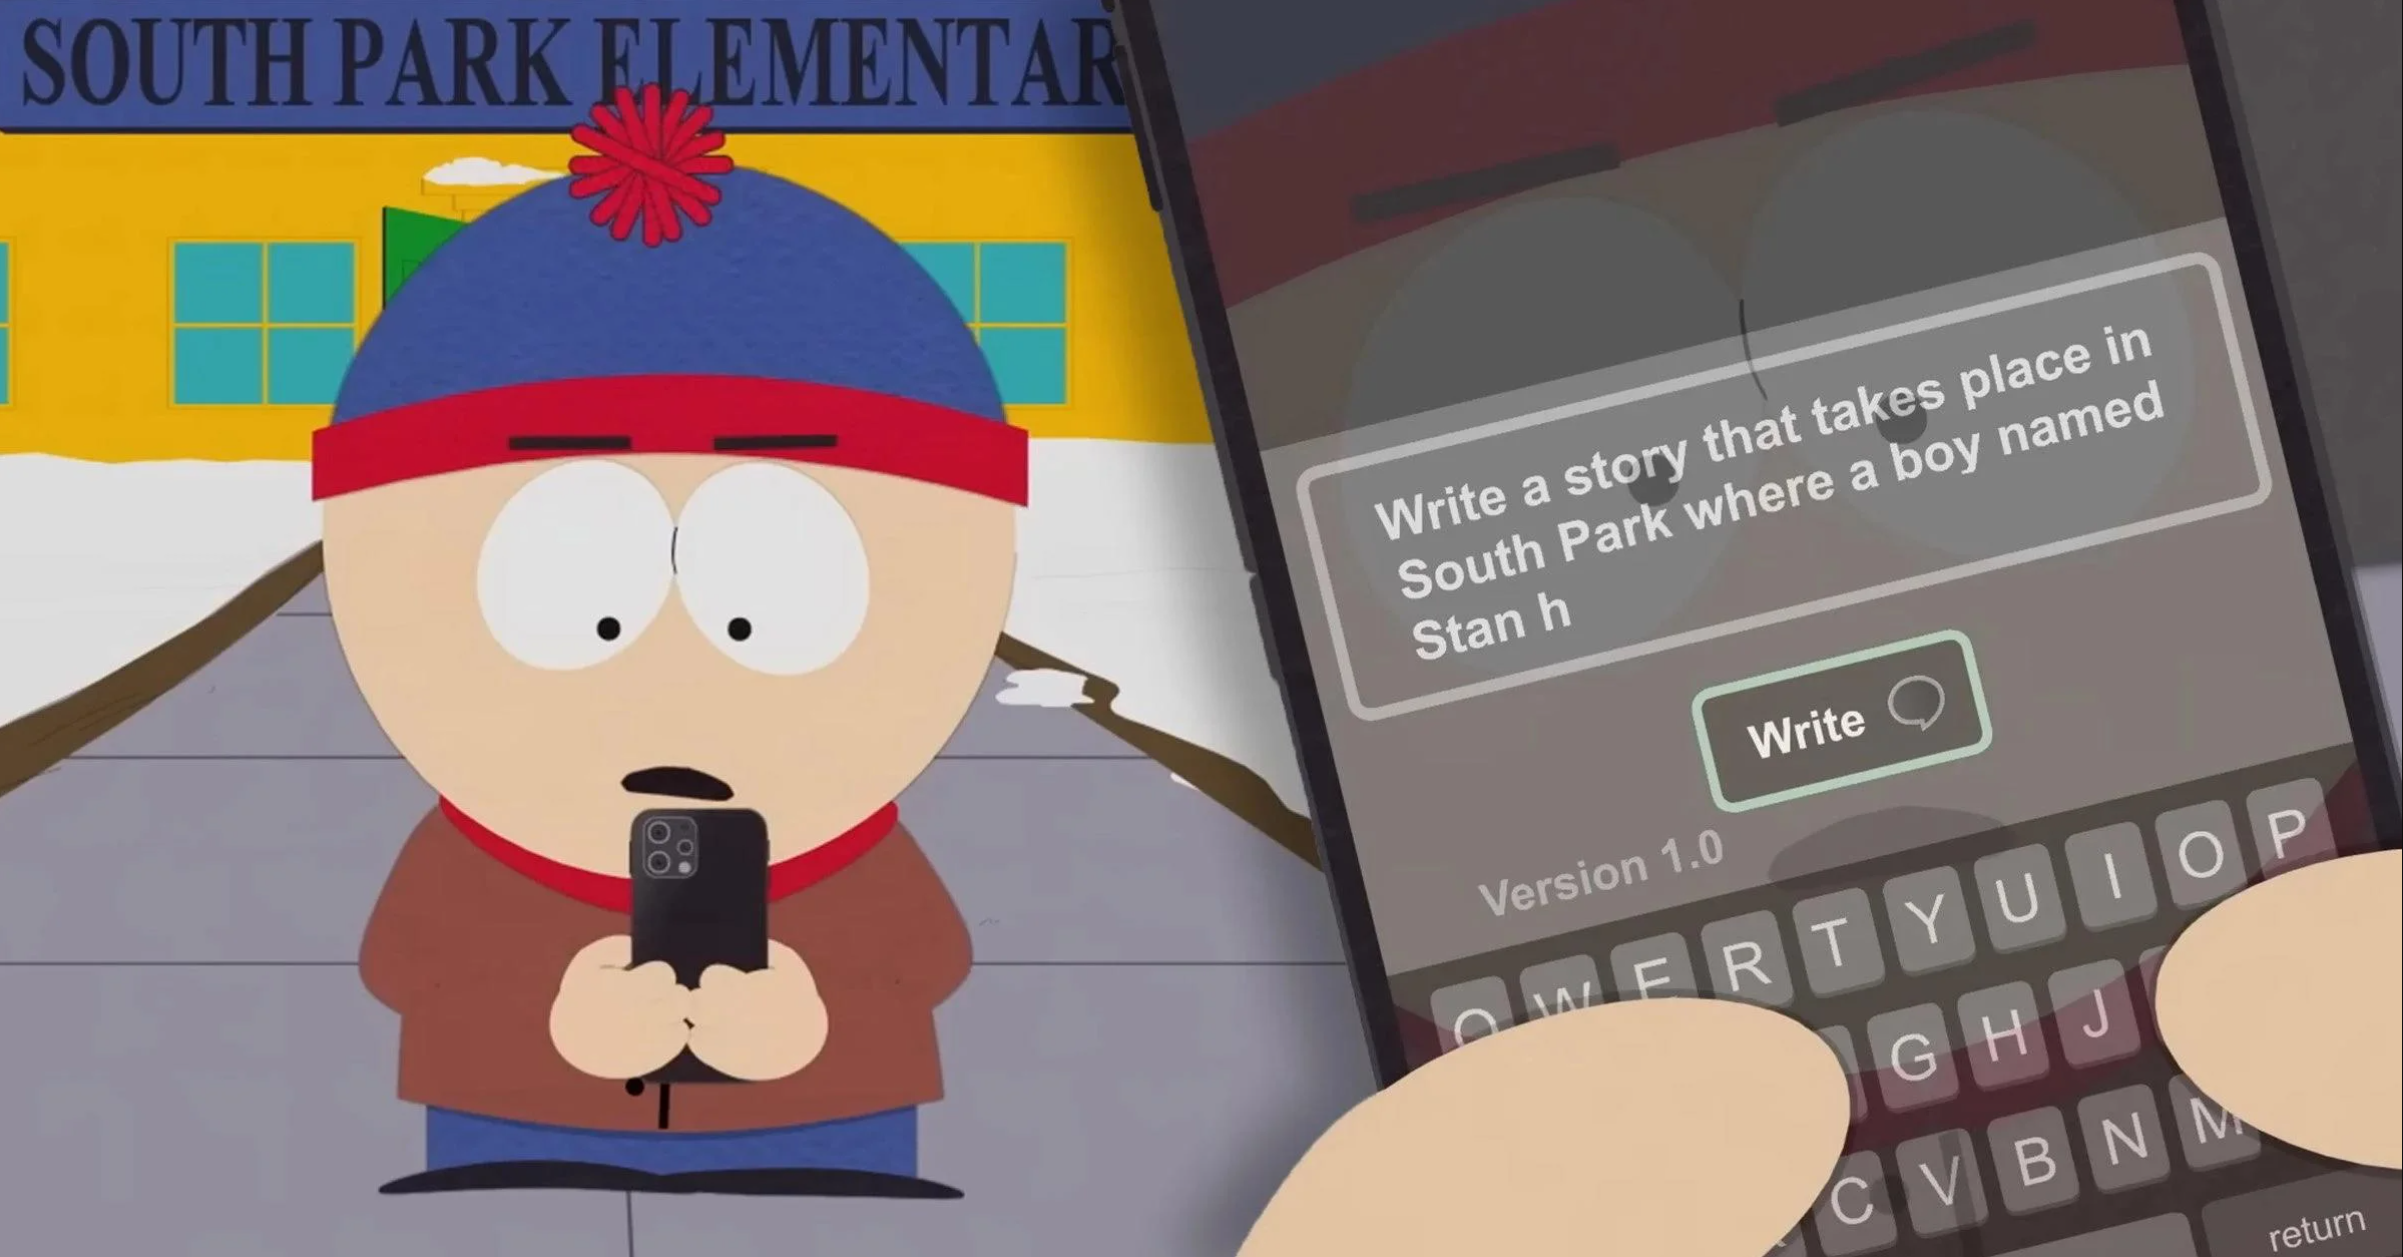 ChatGPT coescreve episódio de South Park sobre inteligência artificial